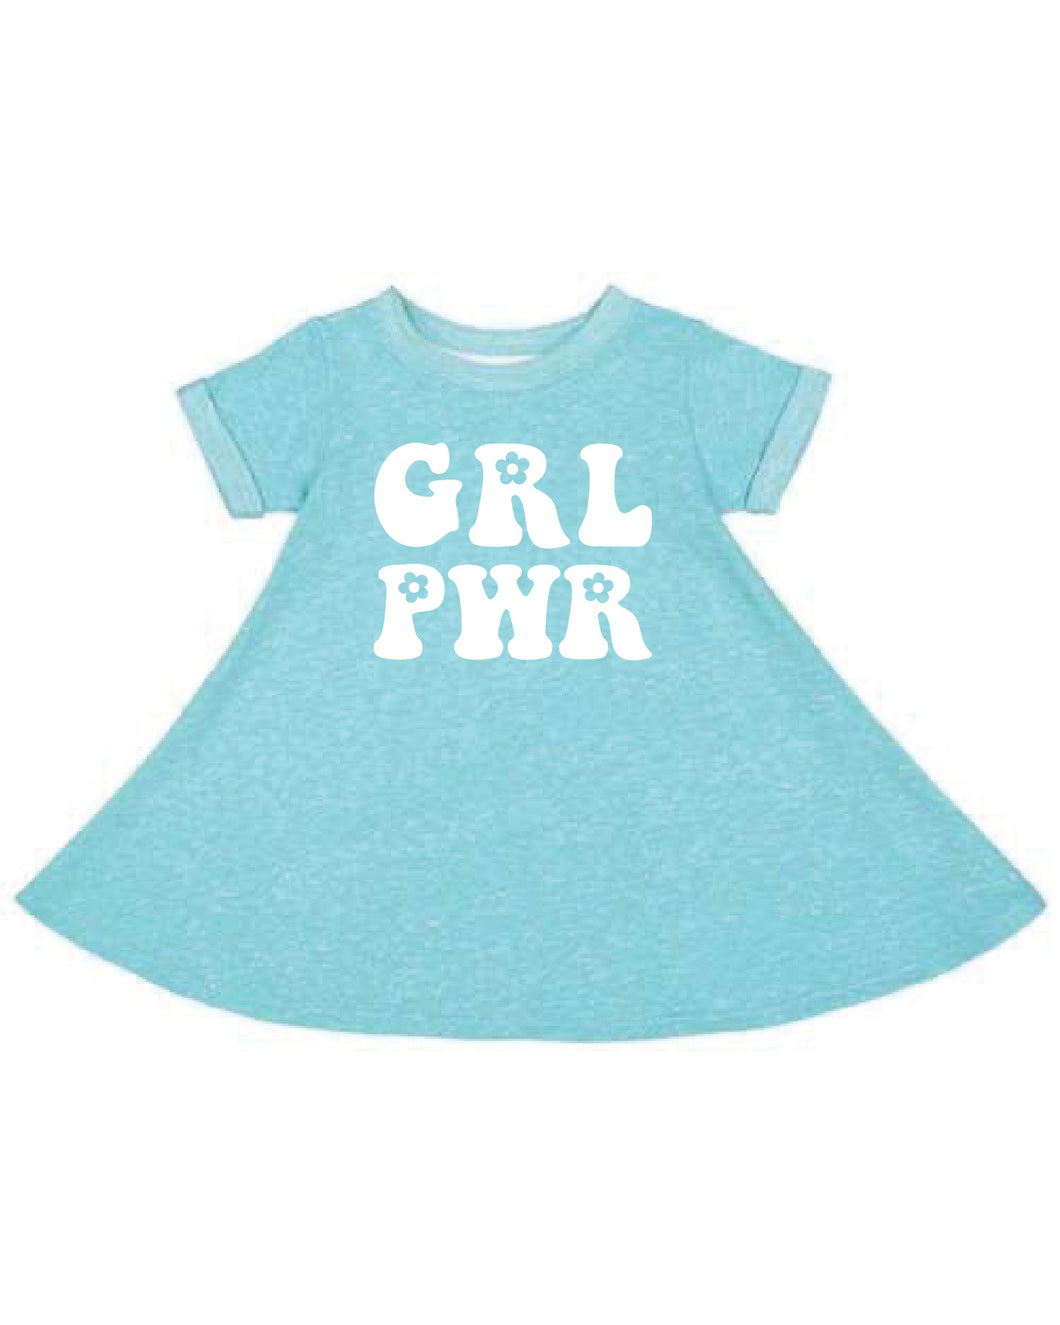 Grl Pwr Daisy Retro Toddler Dress Tee New